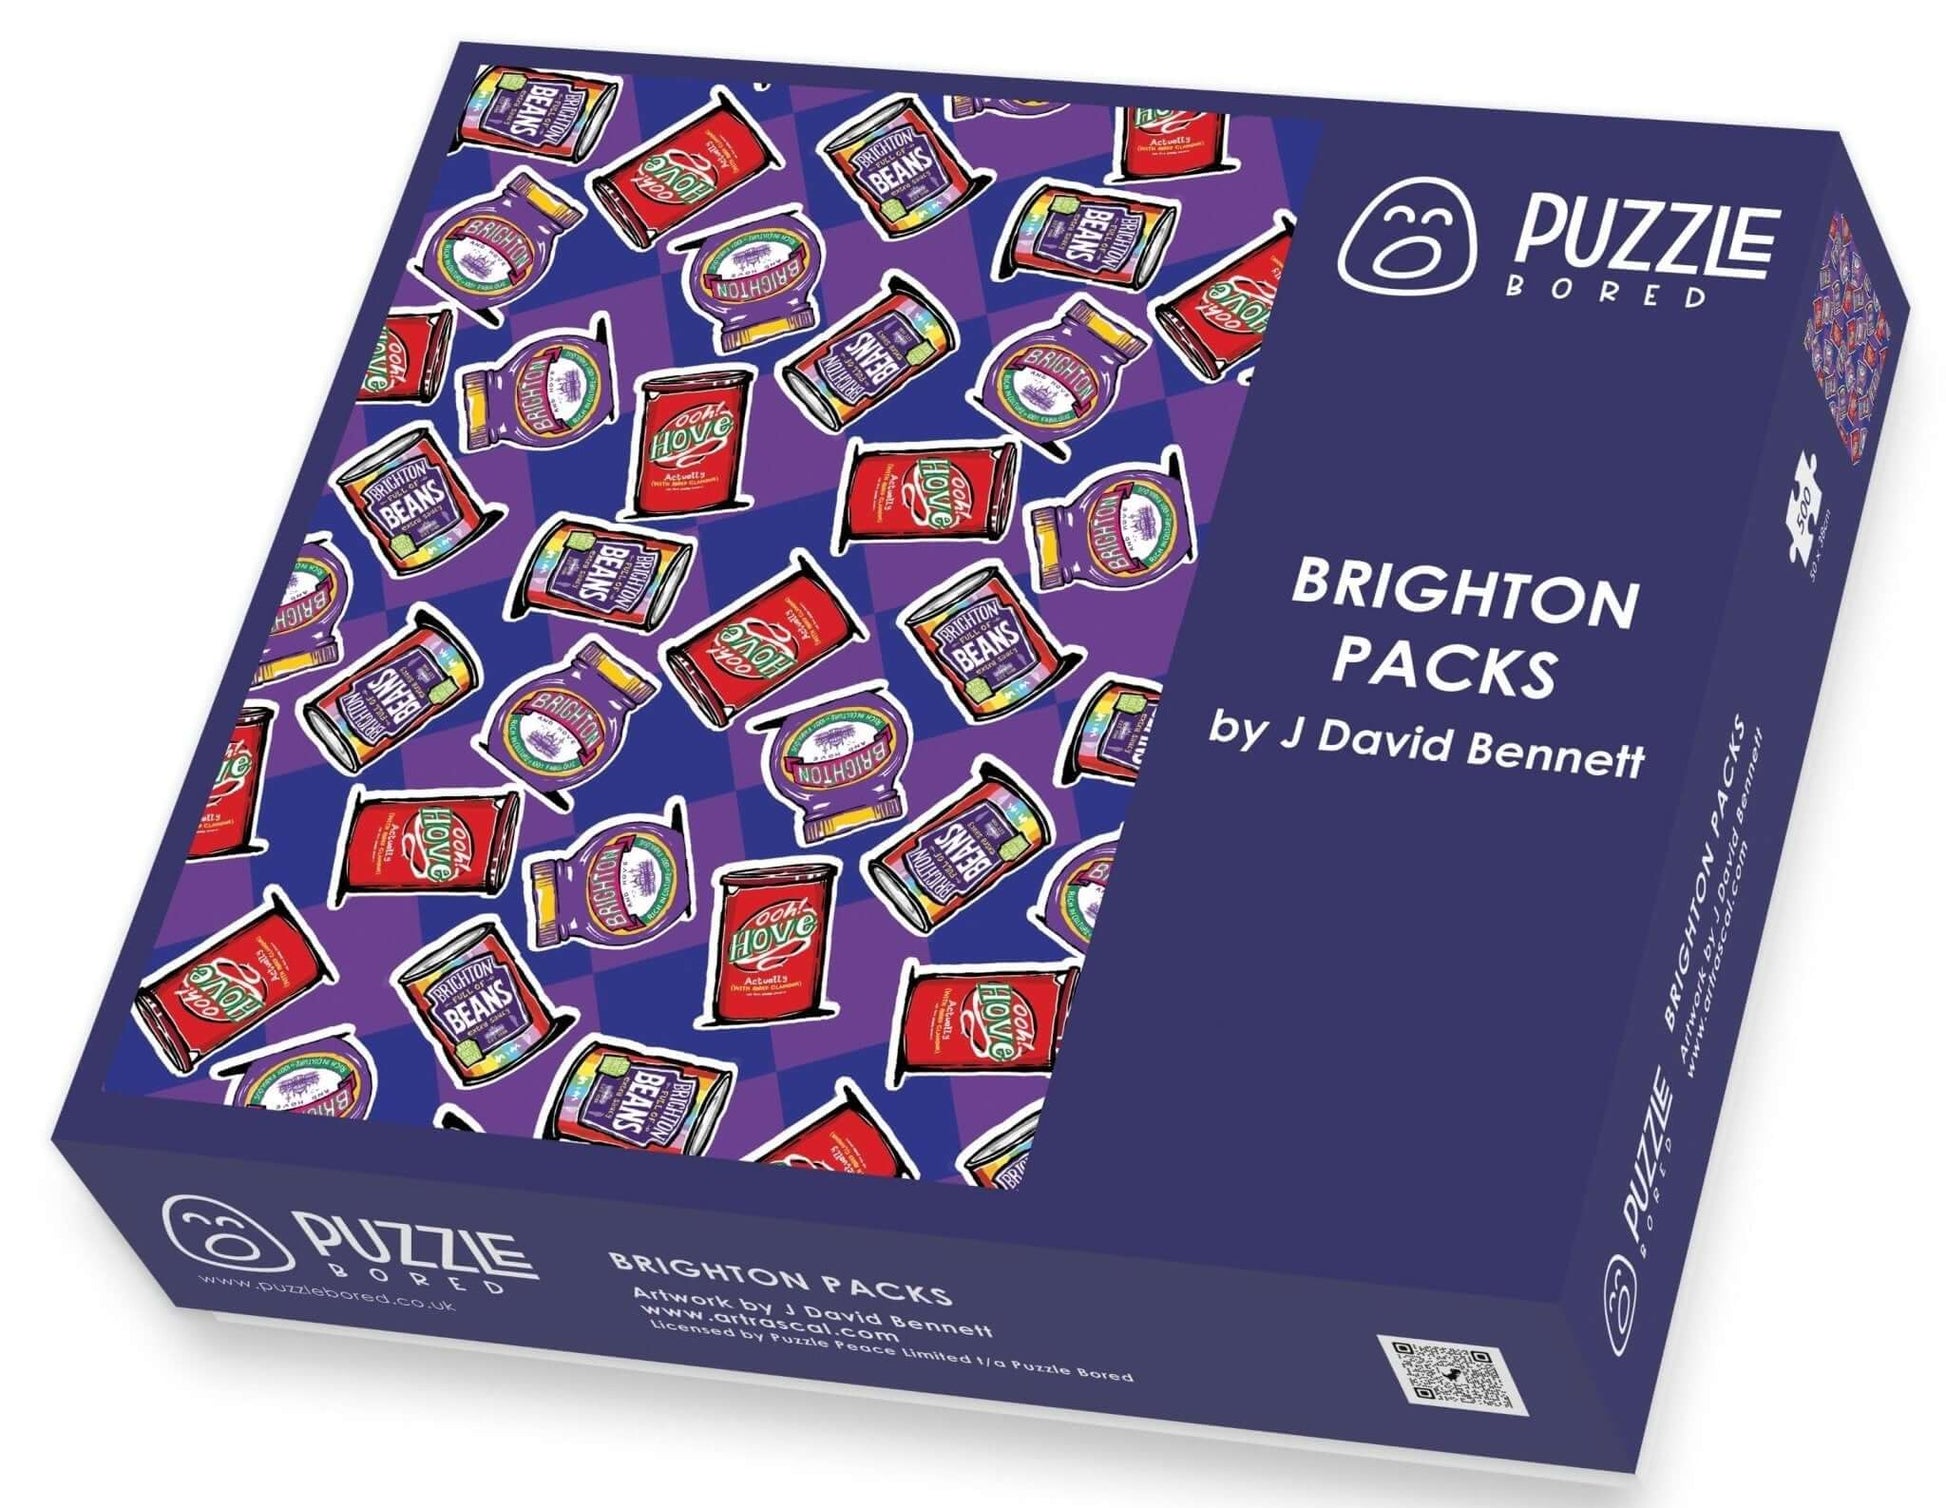 Brighton Packs by J David Bennett - Puzzle Bored